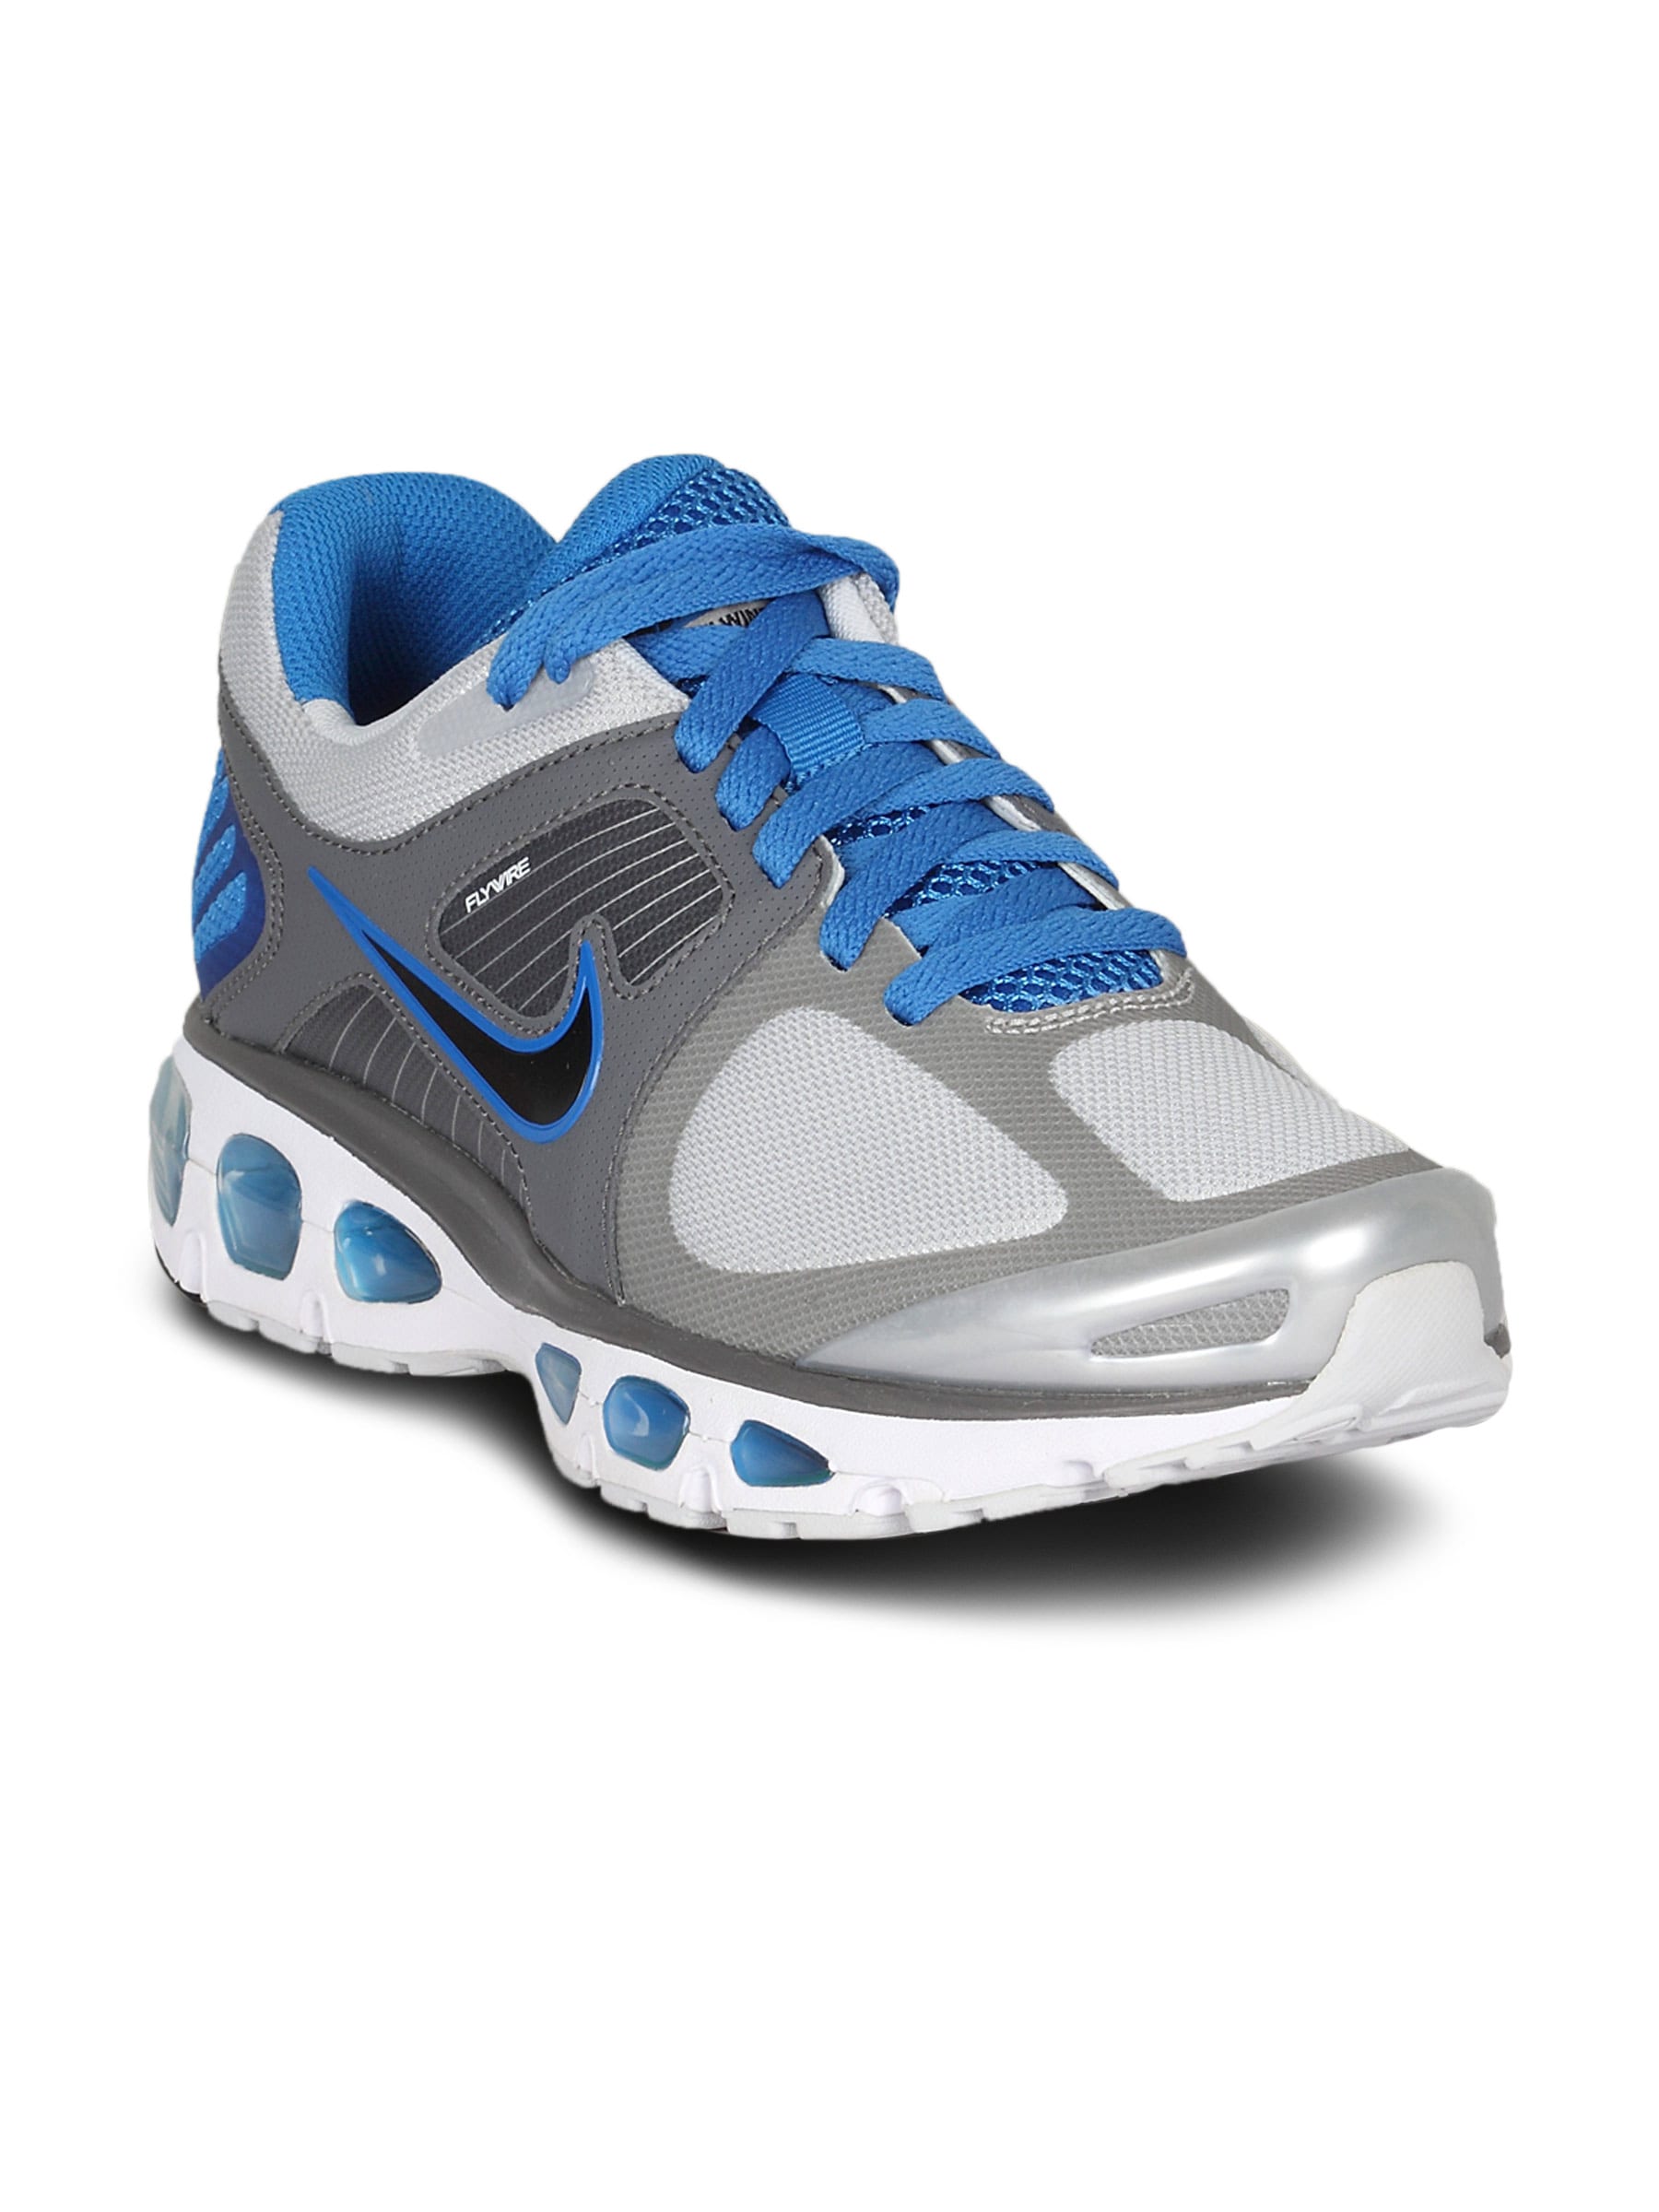 Nike Men's Air Max Tailwind 3 Grey Blue Shoe